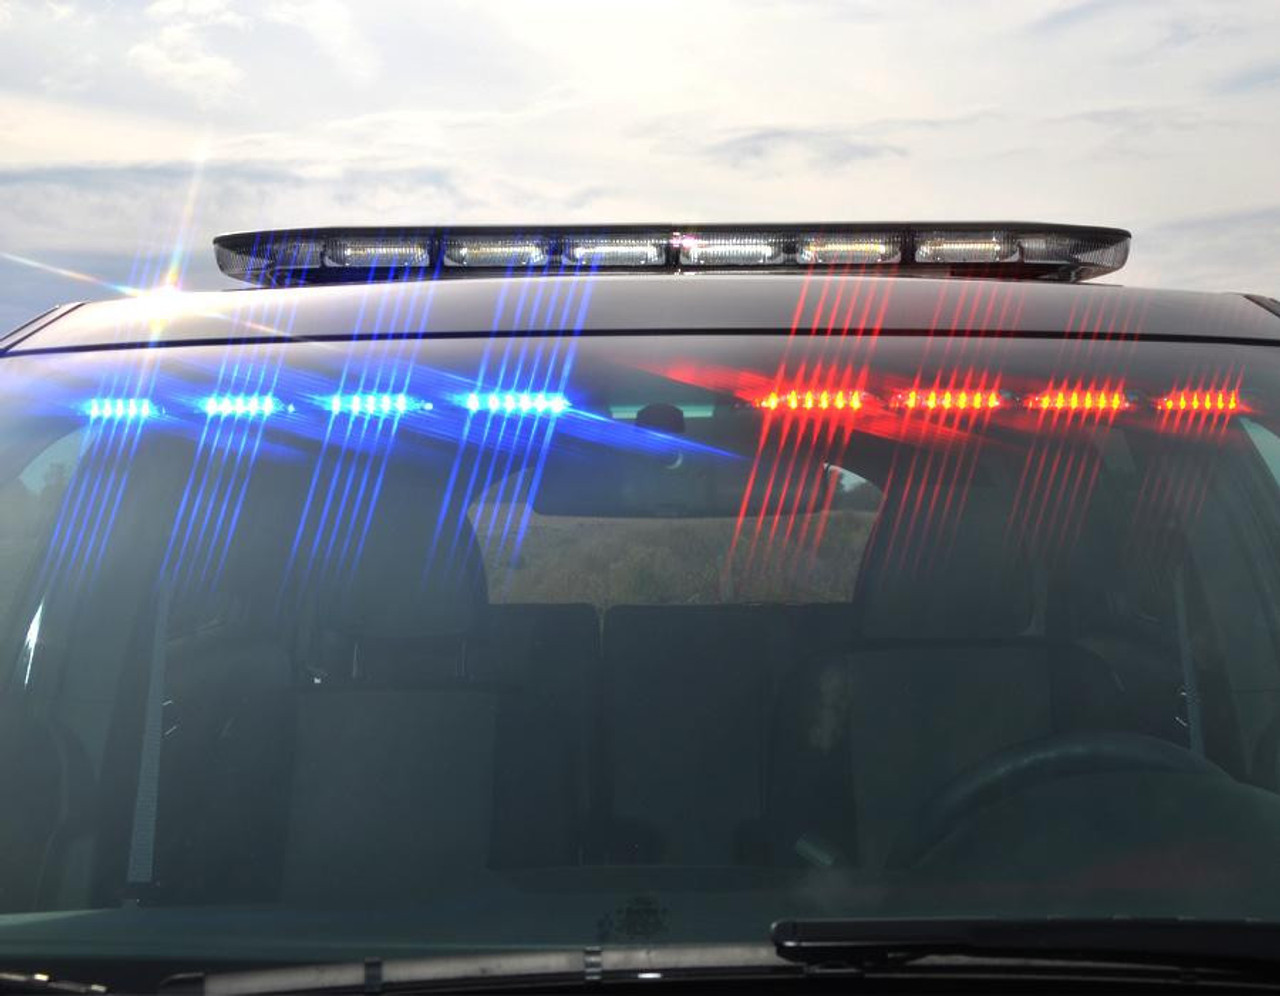 Sound-off Dodge Durango n-Force Interior Front Facing LED Light Bar, Tri Color per lighthead, Red/Blue/White, ENFWB000FJ